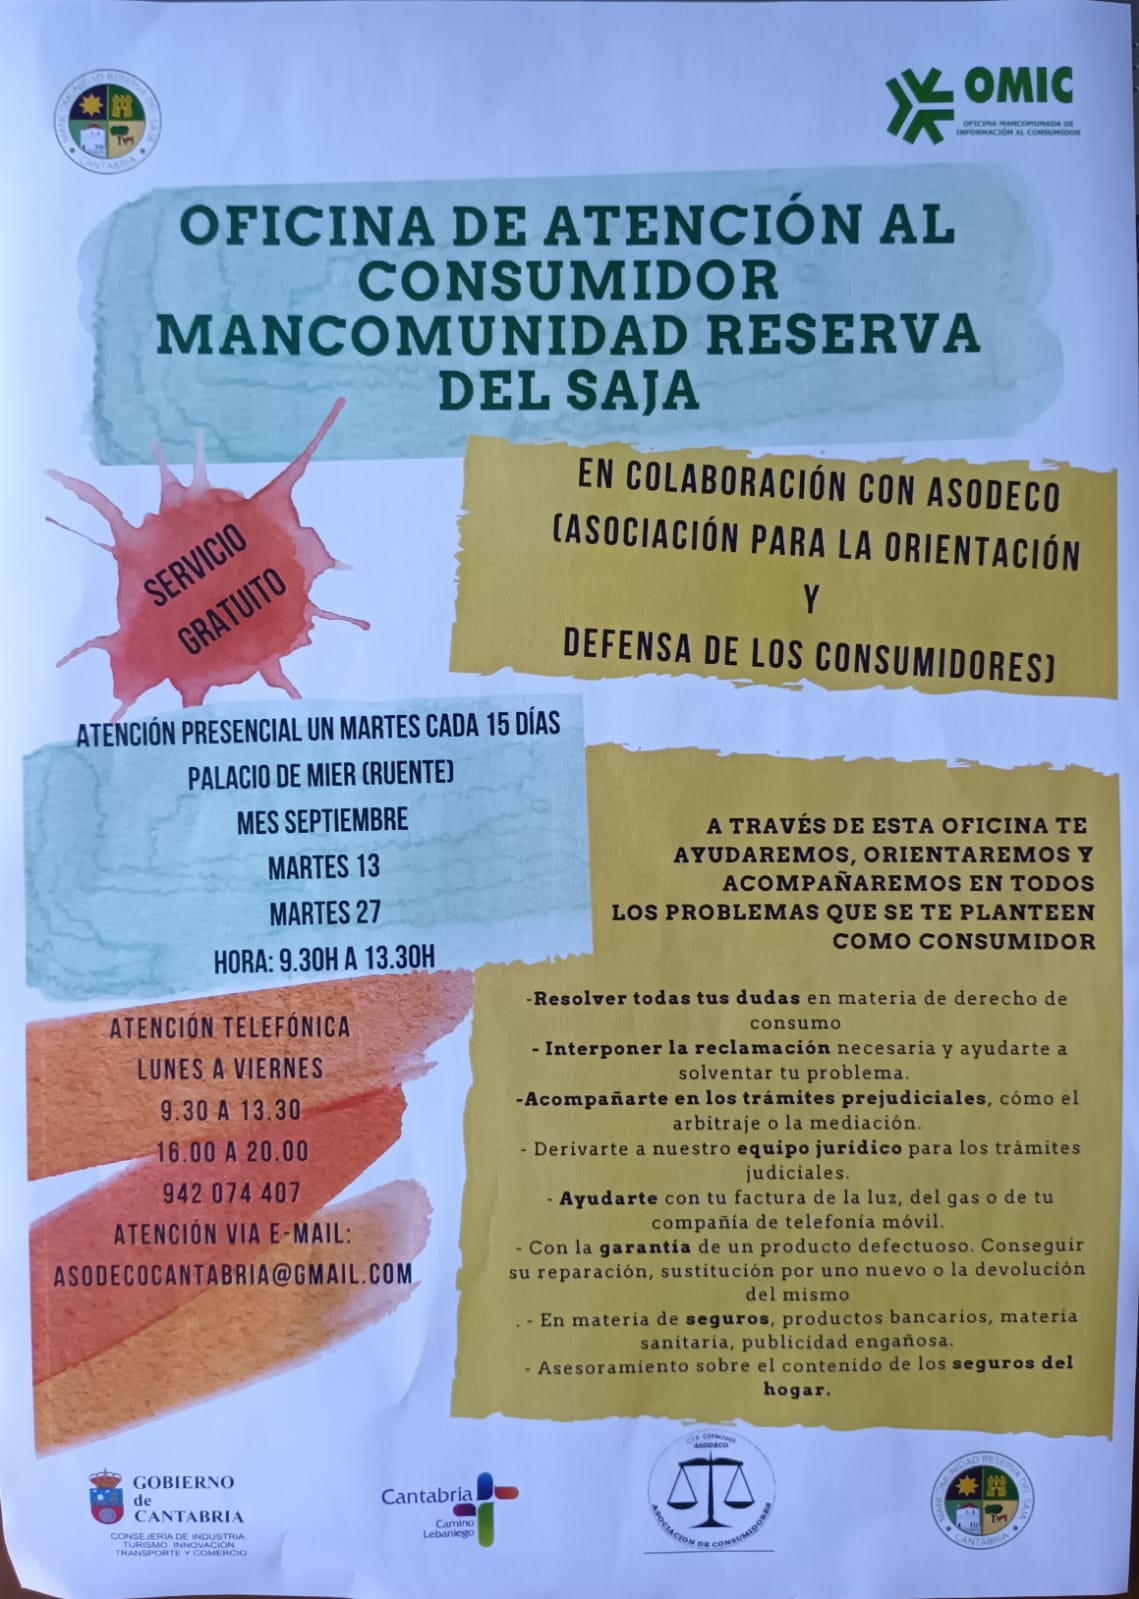 OFICINA DE ATENCION AL CONSUMIDOR MANCOMUNIDAD RESERVA DEL SAJA